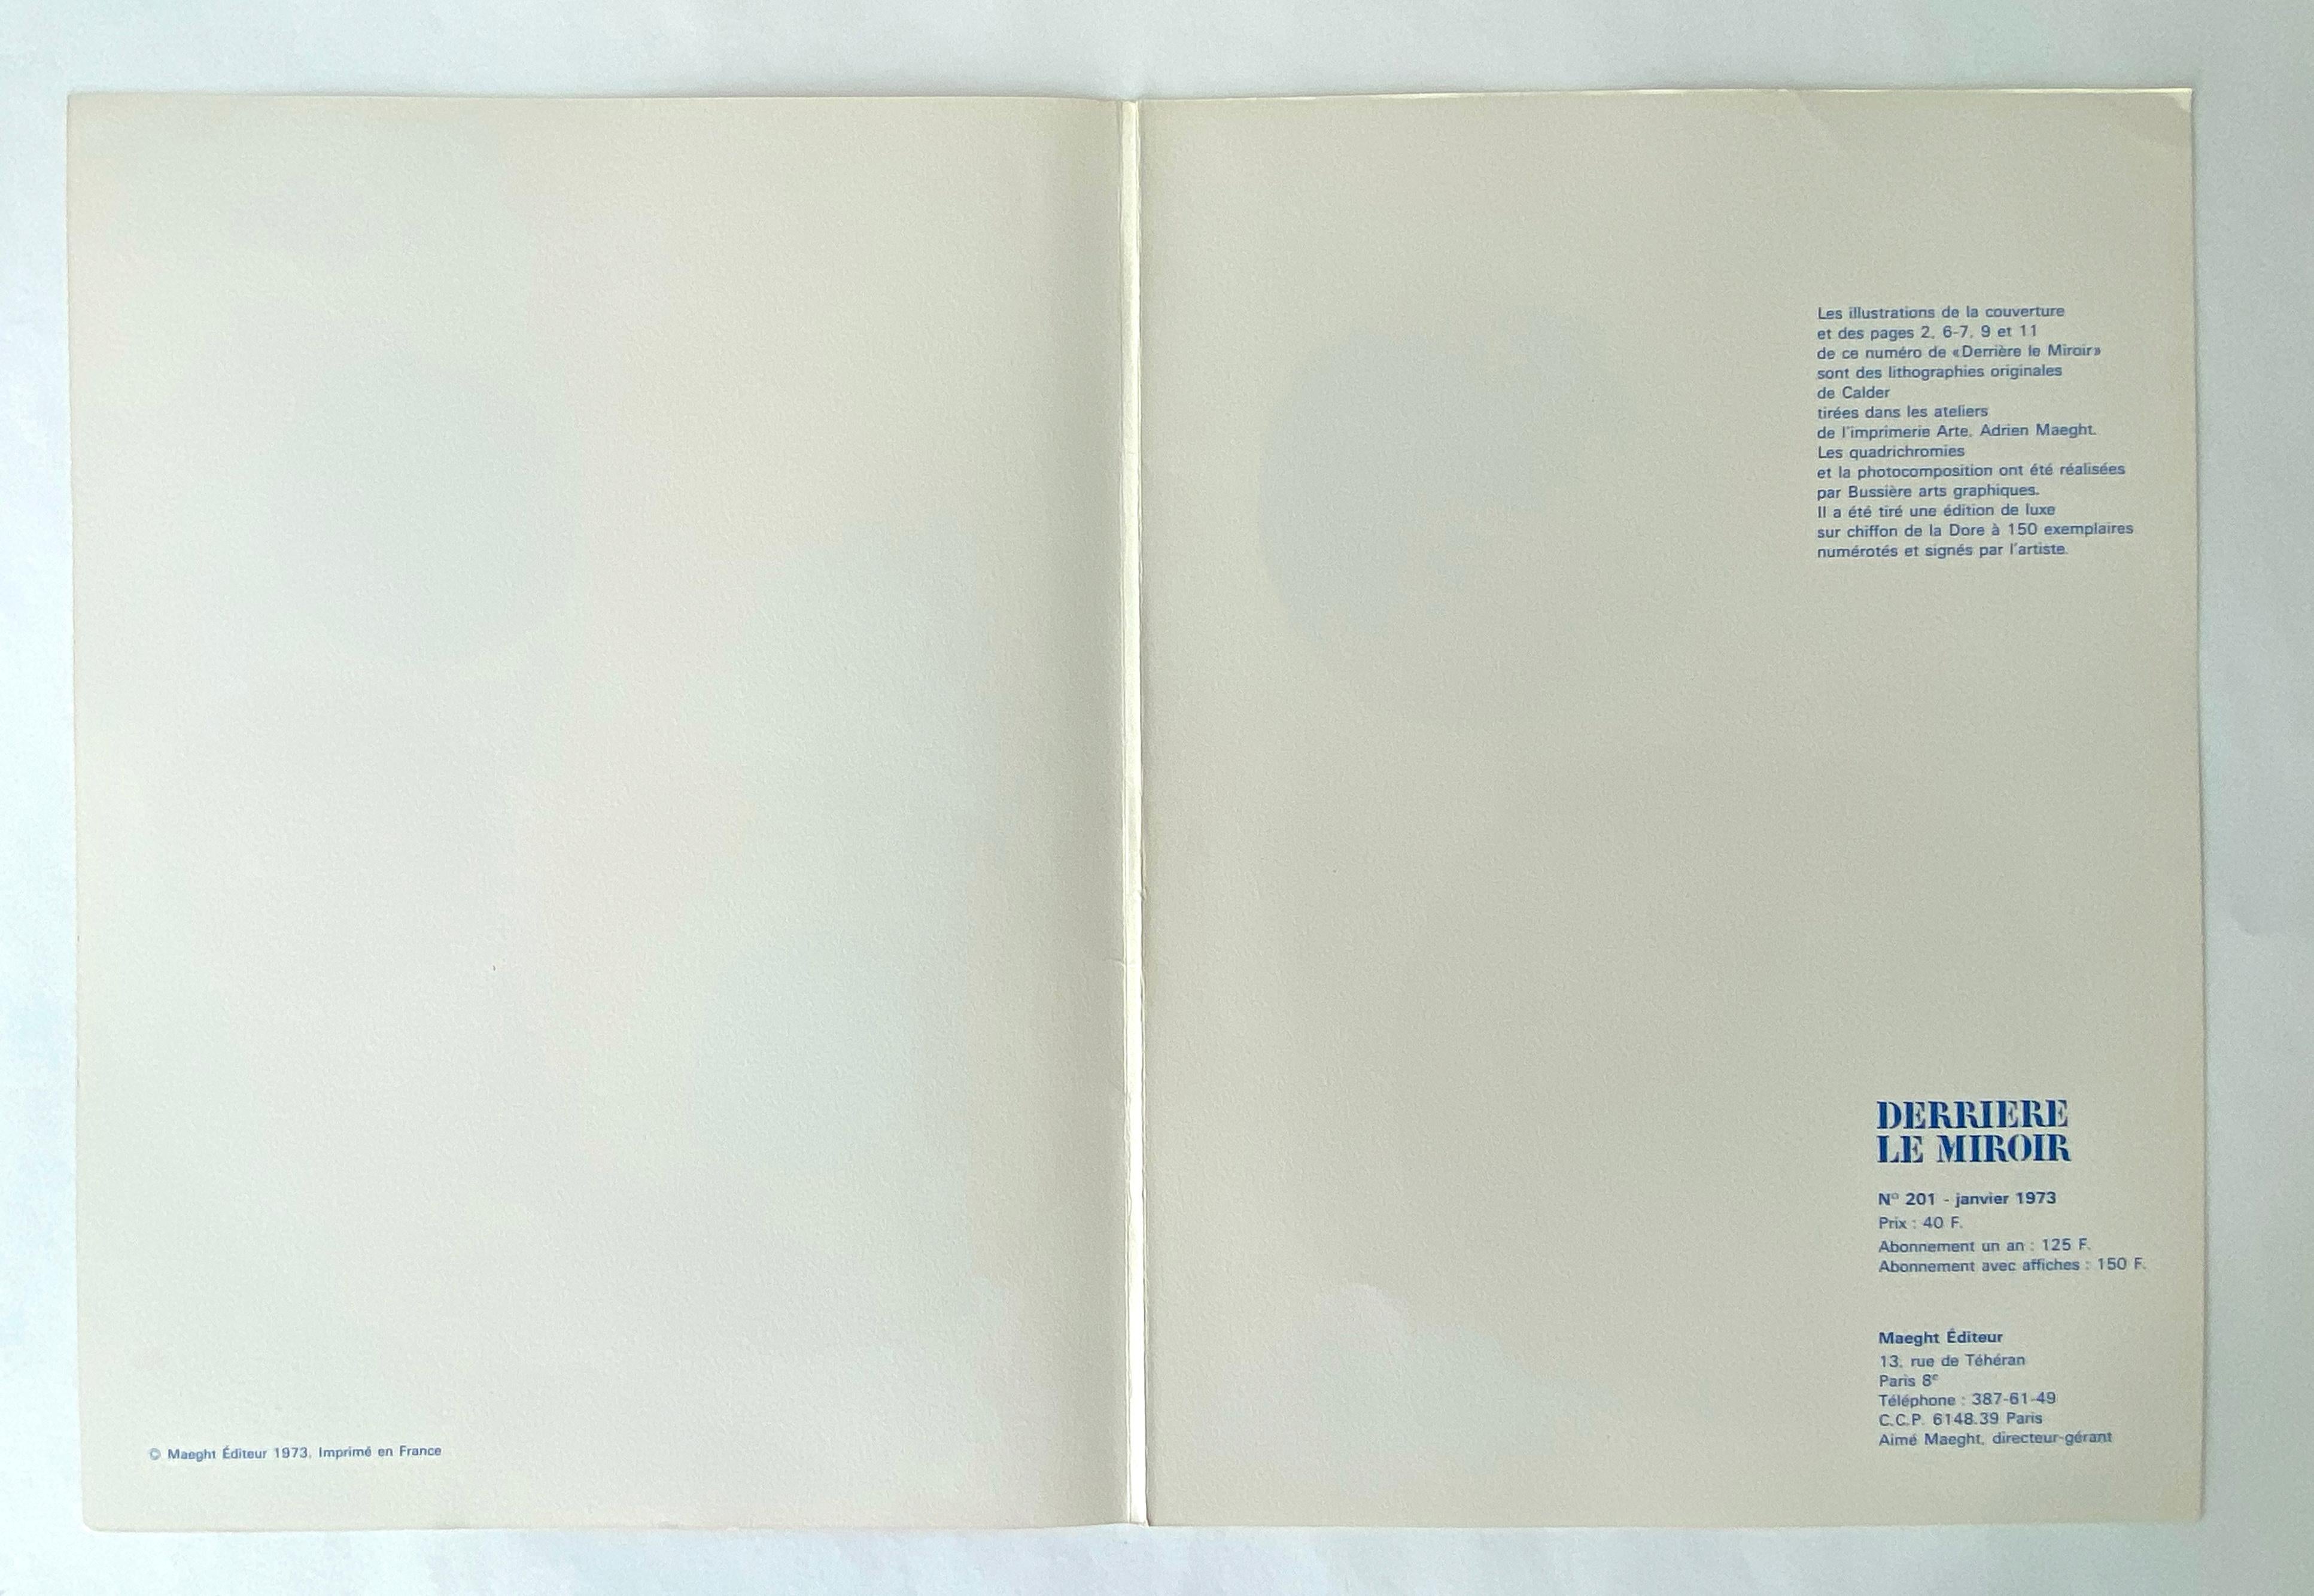 Derriere Le Miroir No. 201, Cover - Abstract Print by Alexander Calder